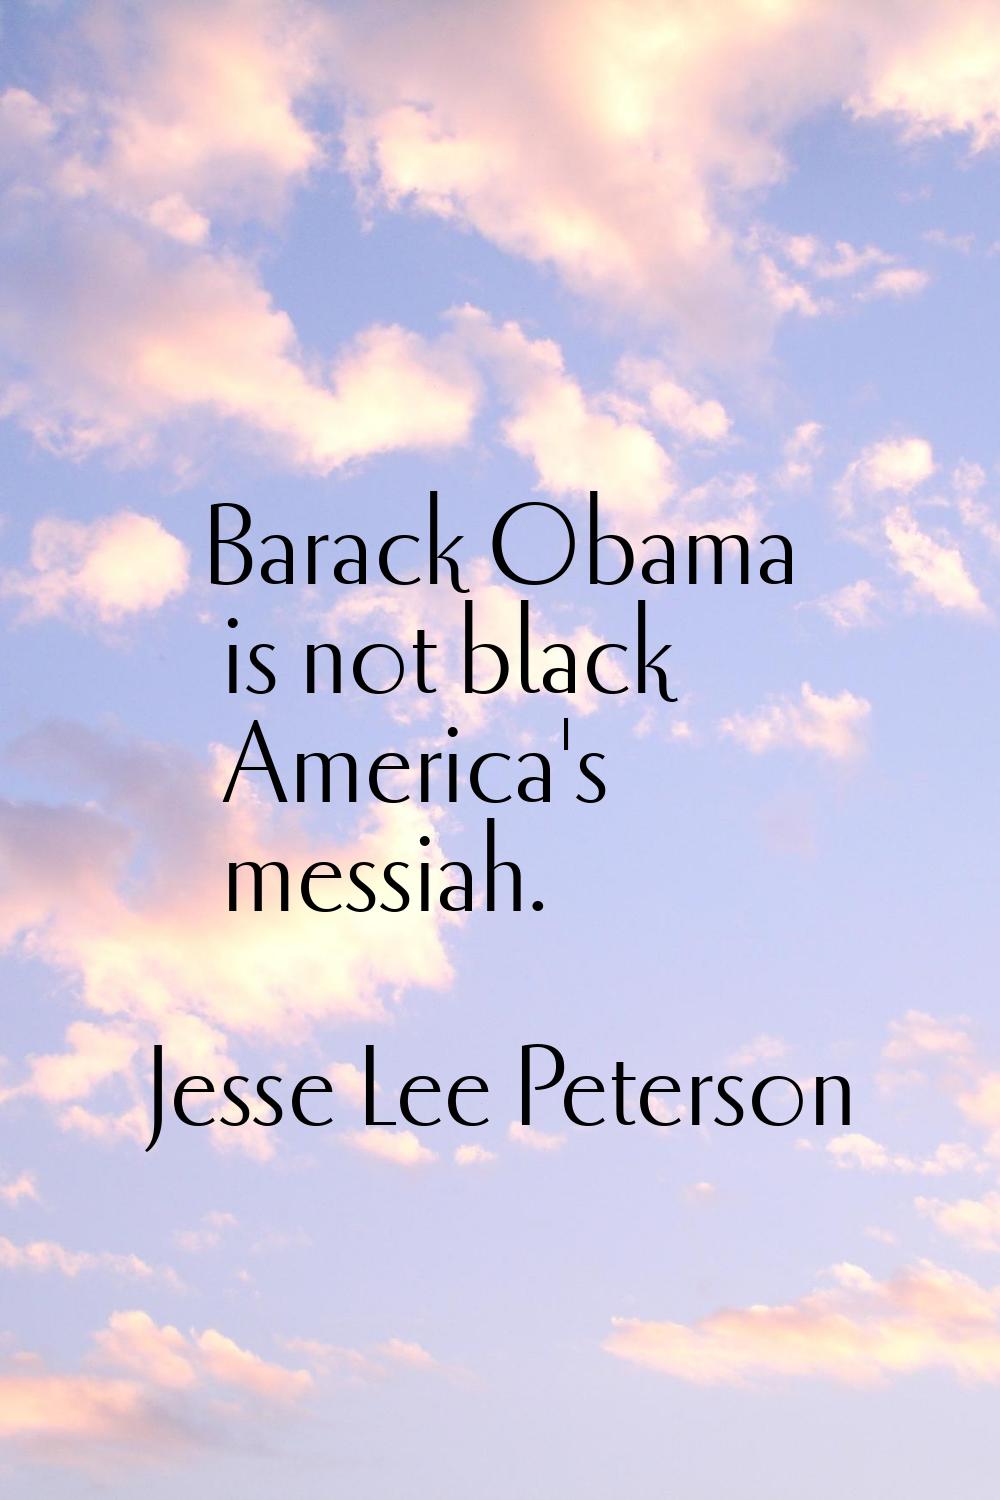 Barack Obama is not black America's messiah.